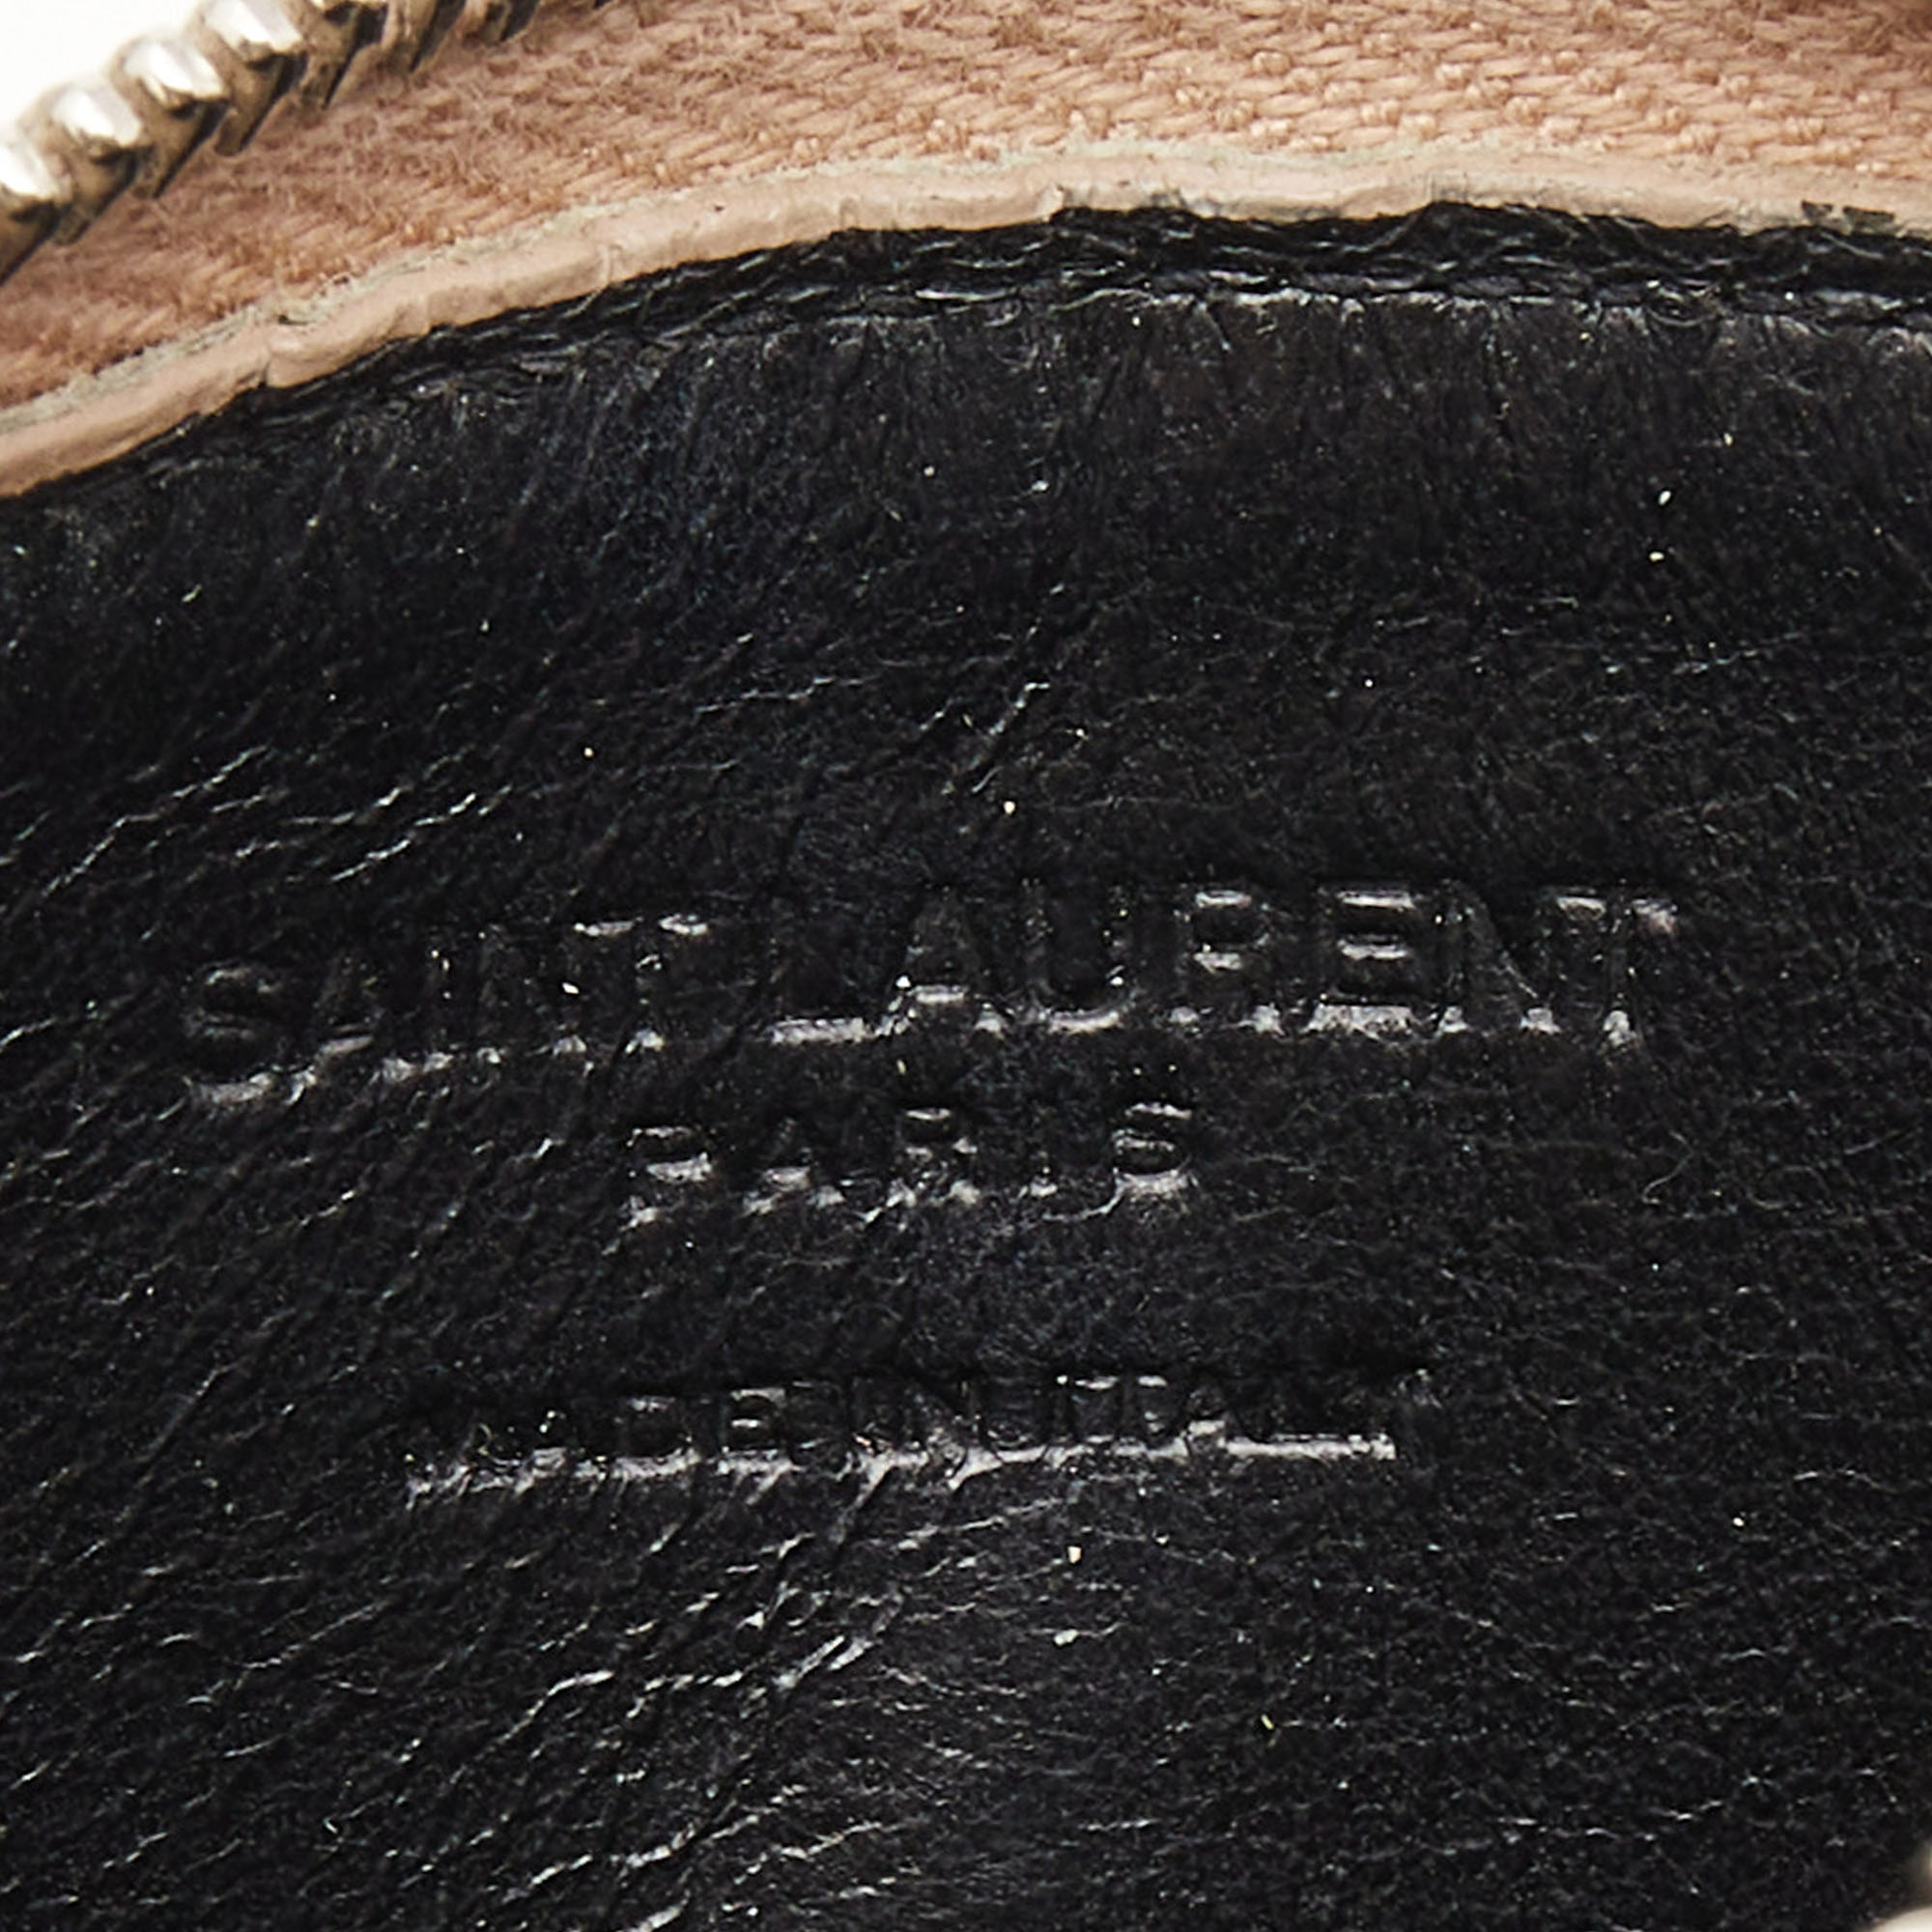 Saint Laurent Beige Croc Embosses Leather Zip Card Holder